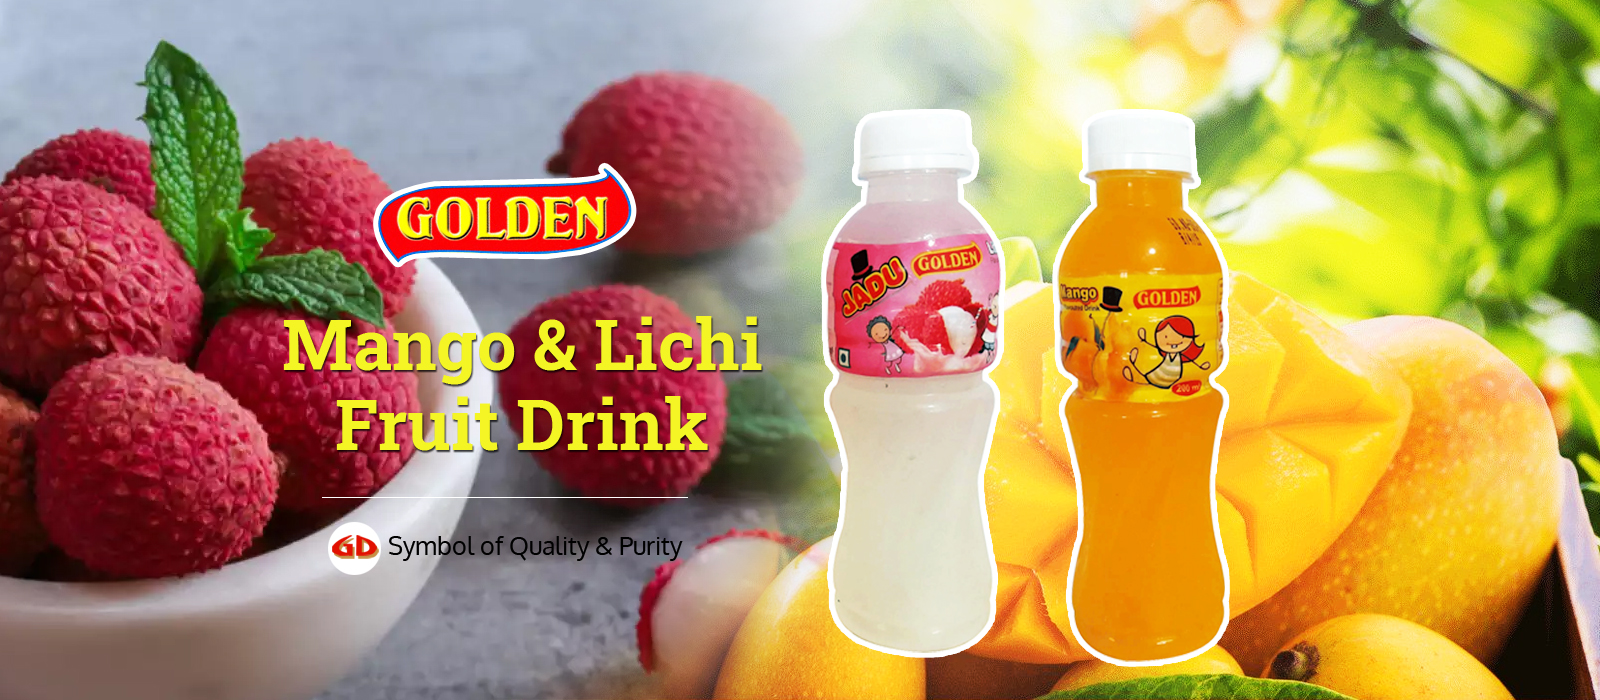 Golden Mango & Litchi Fruit Drink